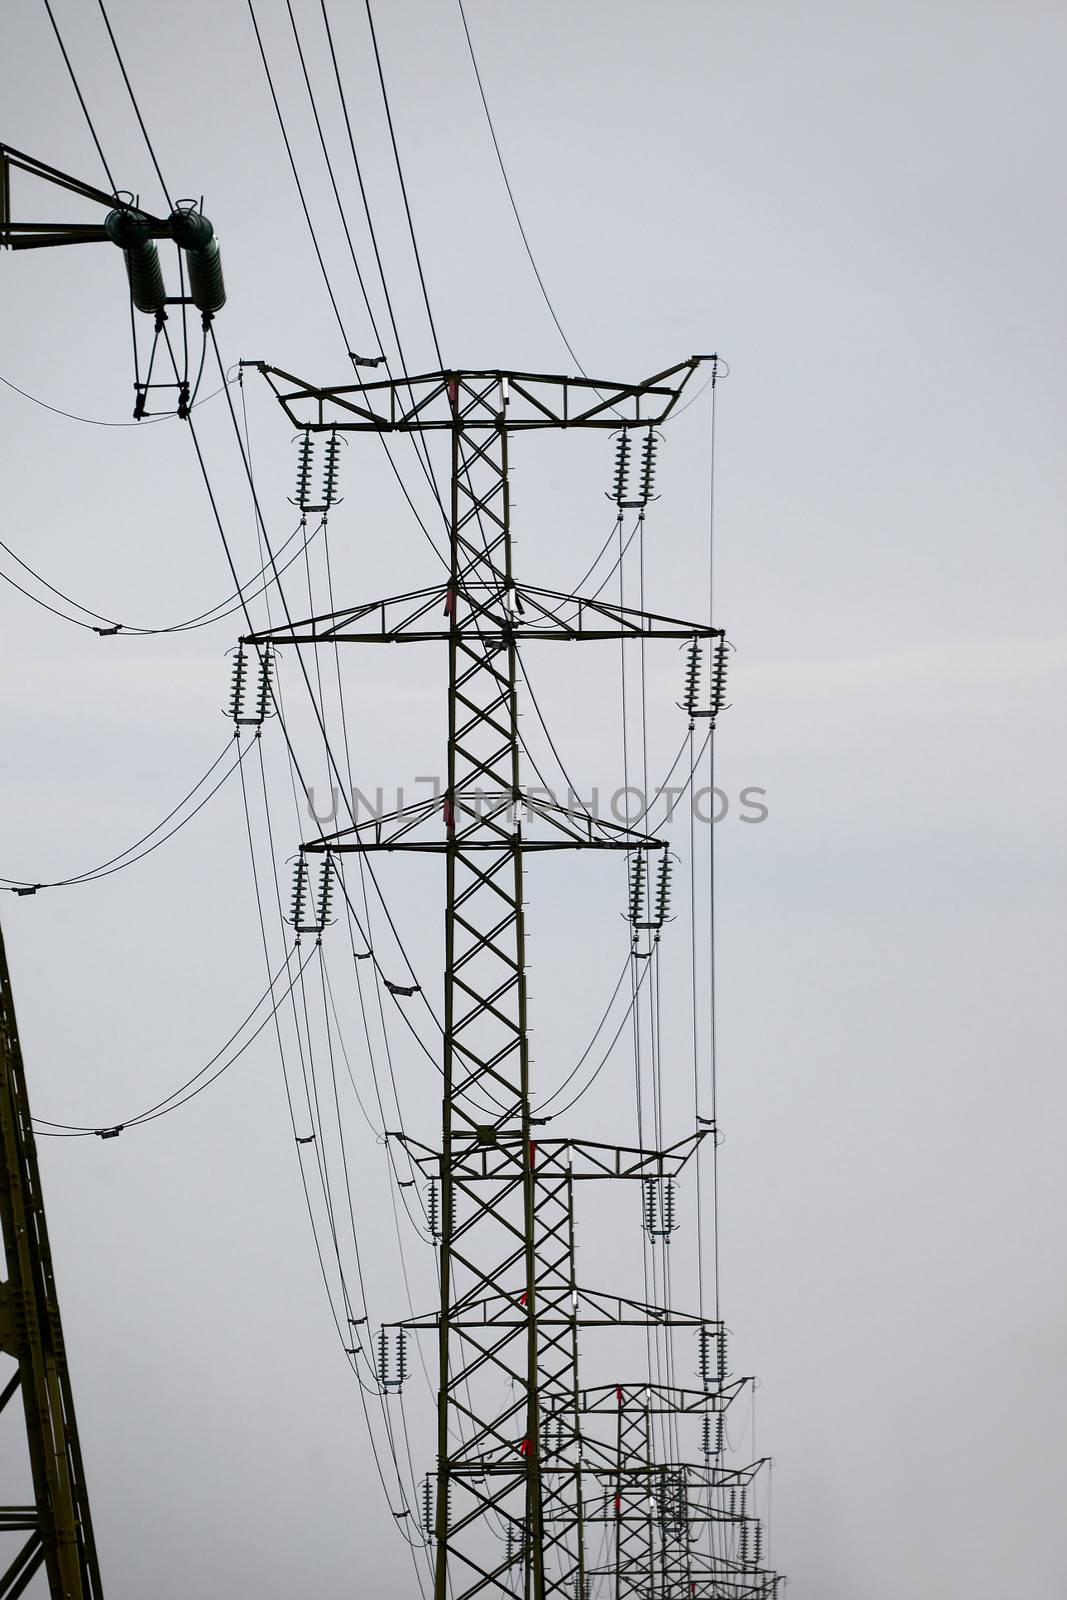 High voltage electric line pillars